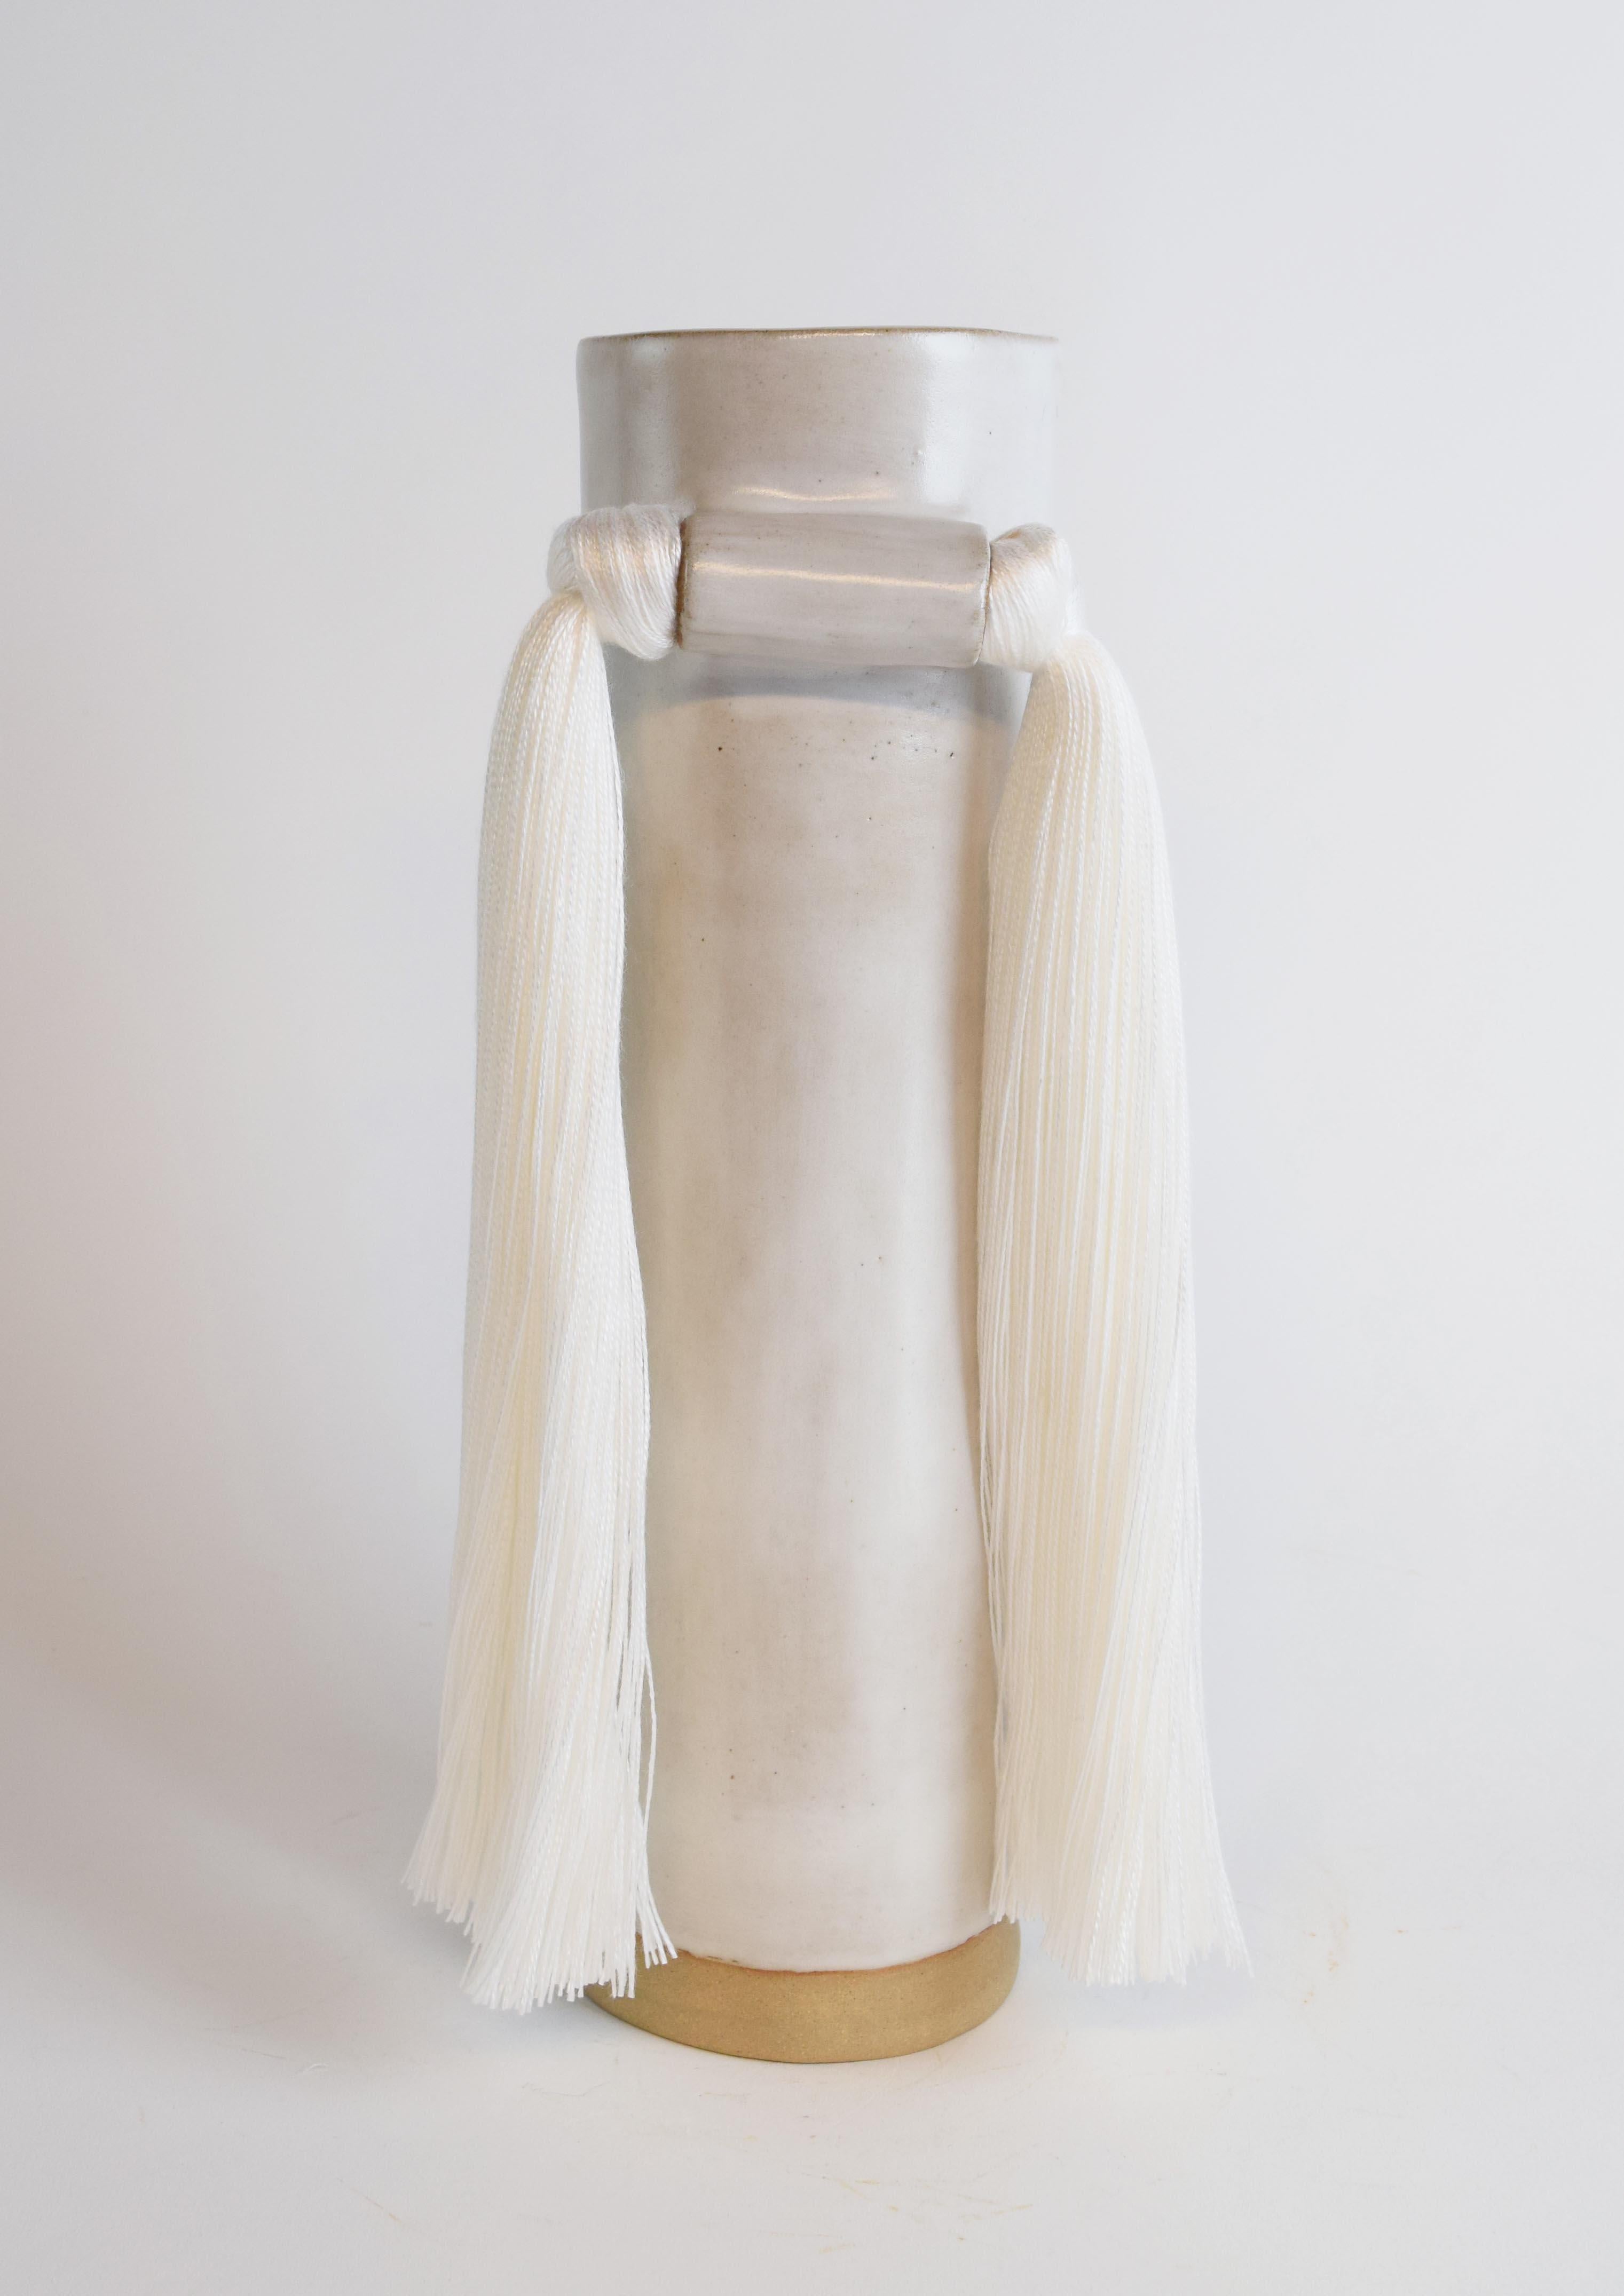 Hand-Crafted Handmade Ceramic Vase #531 in Satin White Glaze with White Tencel Fringe Detail For Sale